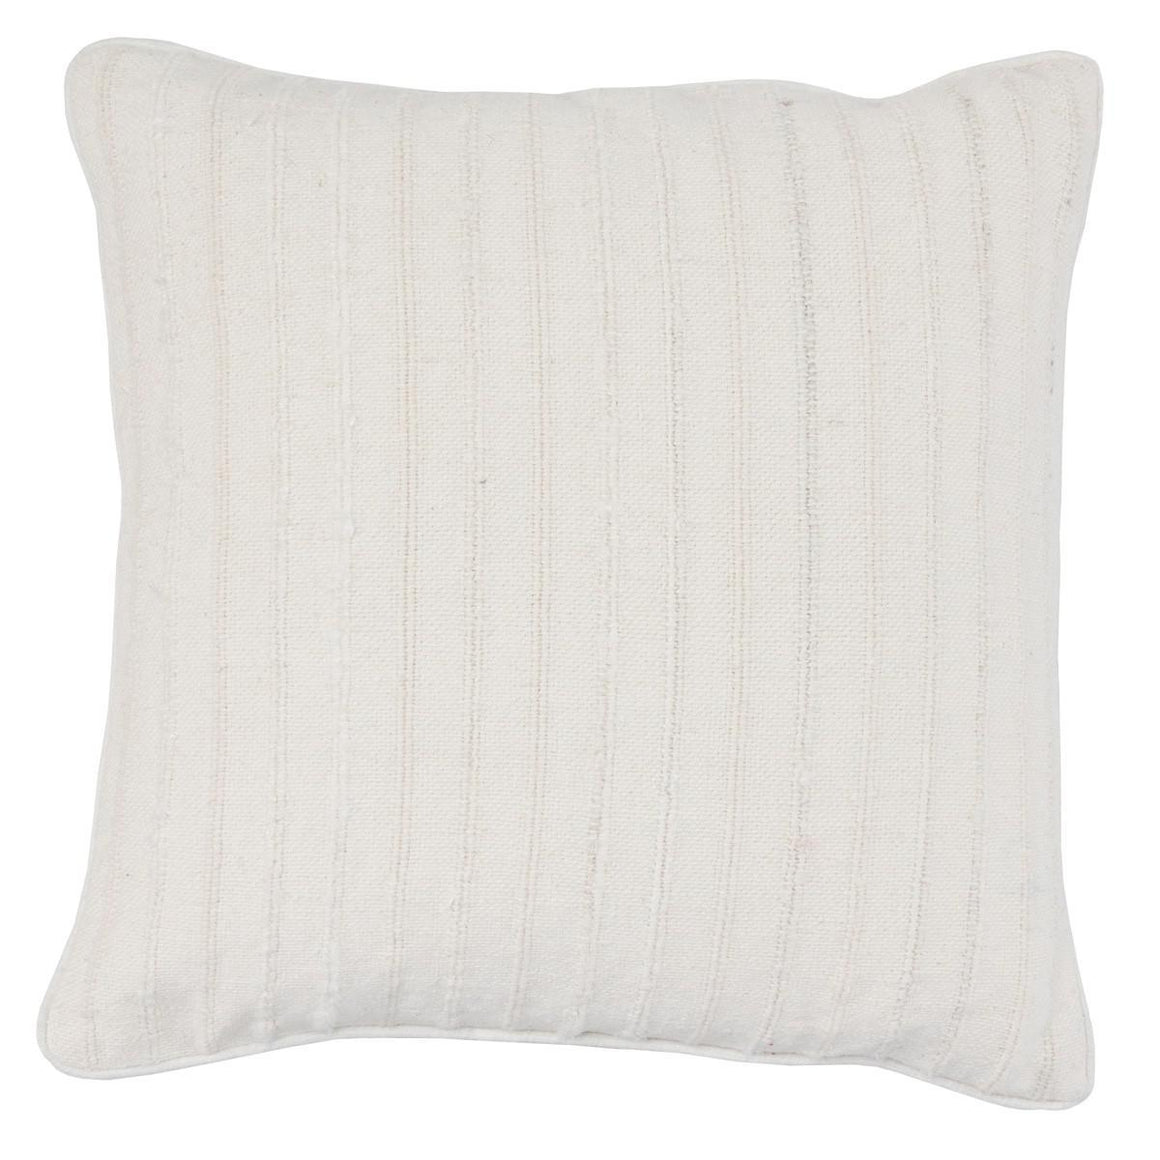 Morris 22" x 22" Belgian Flax Linen Pillow - White - Classic Carolina Home